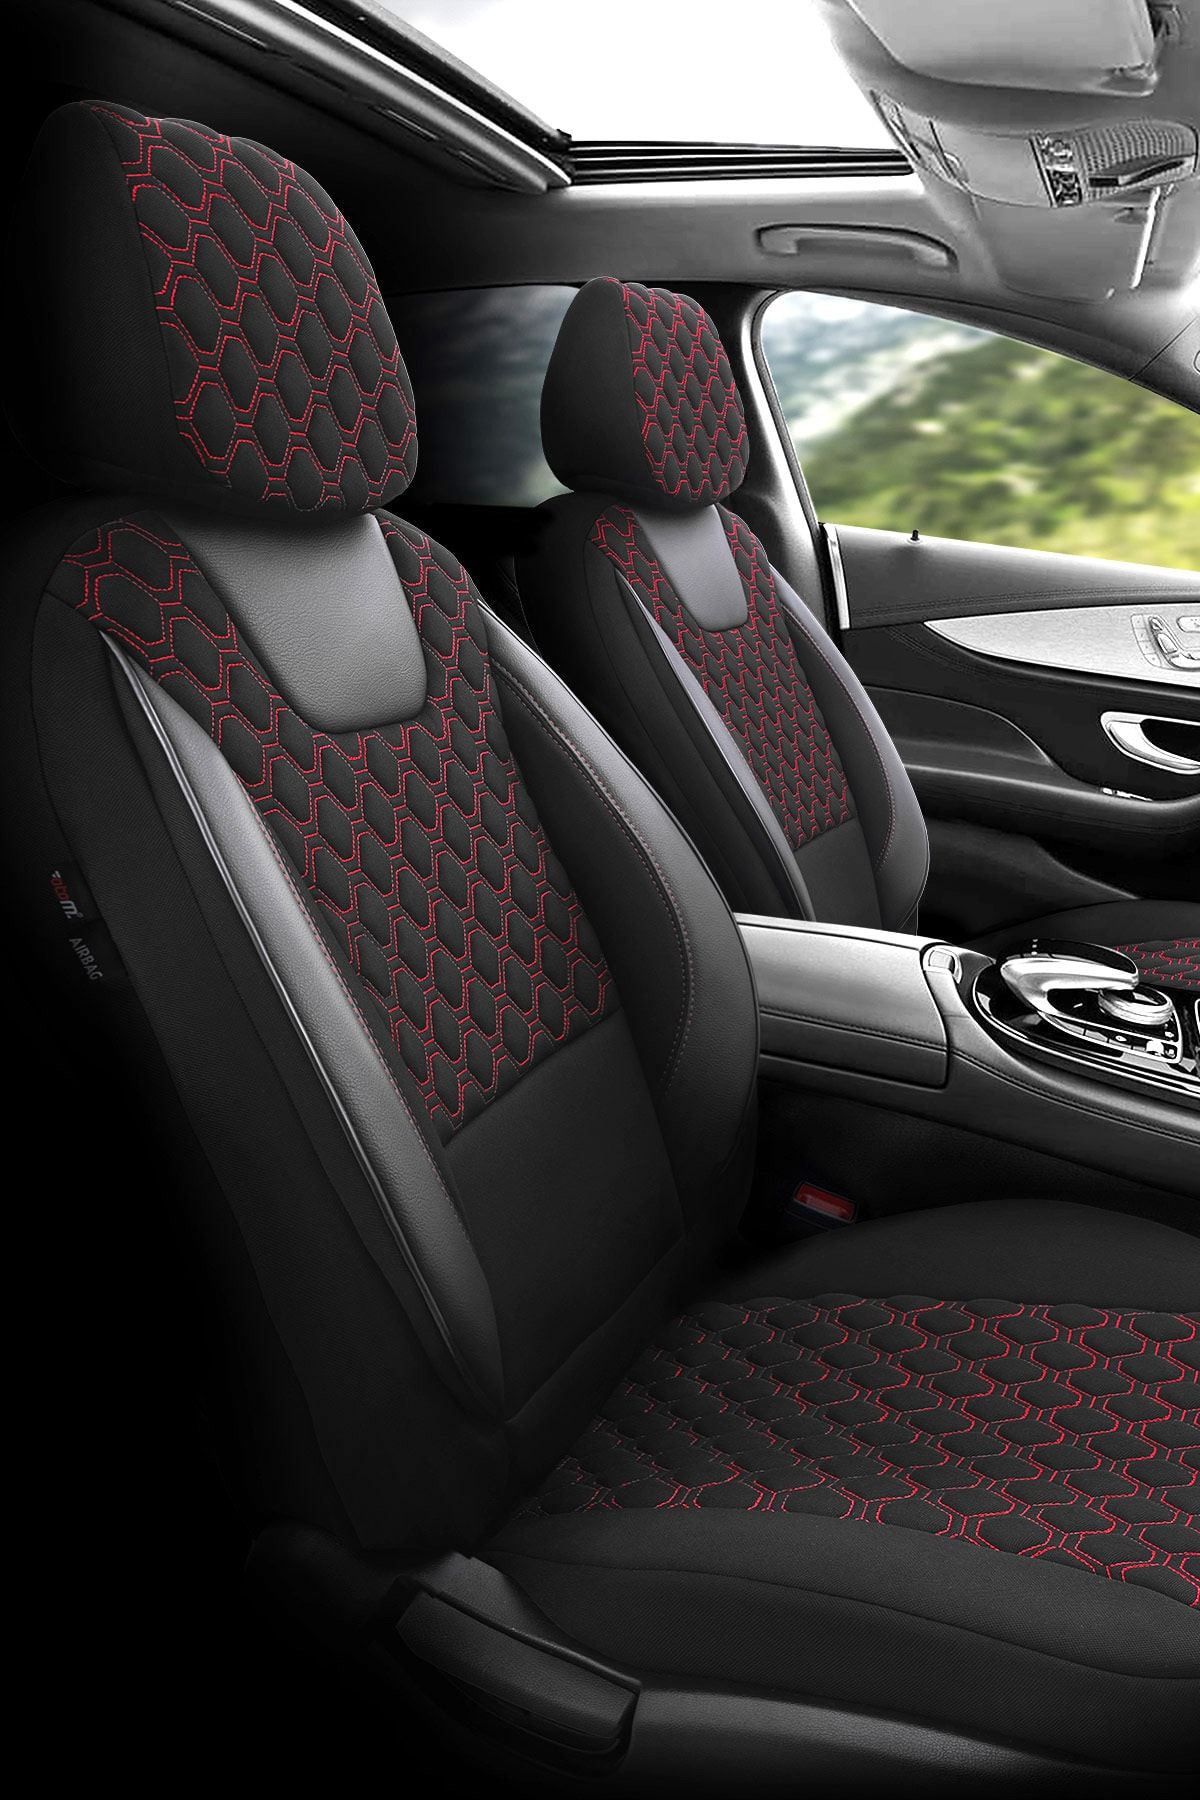 Otom Turismo Design Ortopedik Premium Oto Koltuk Kılıfı Tam Set - Siyah-kırmızı